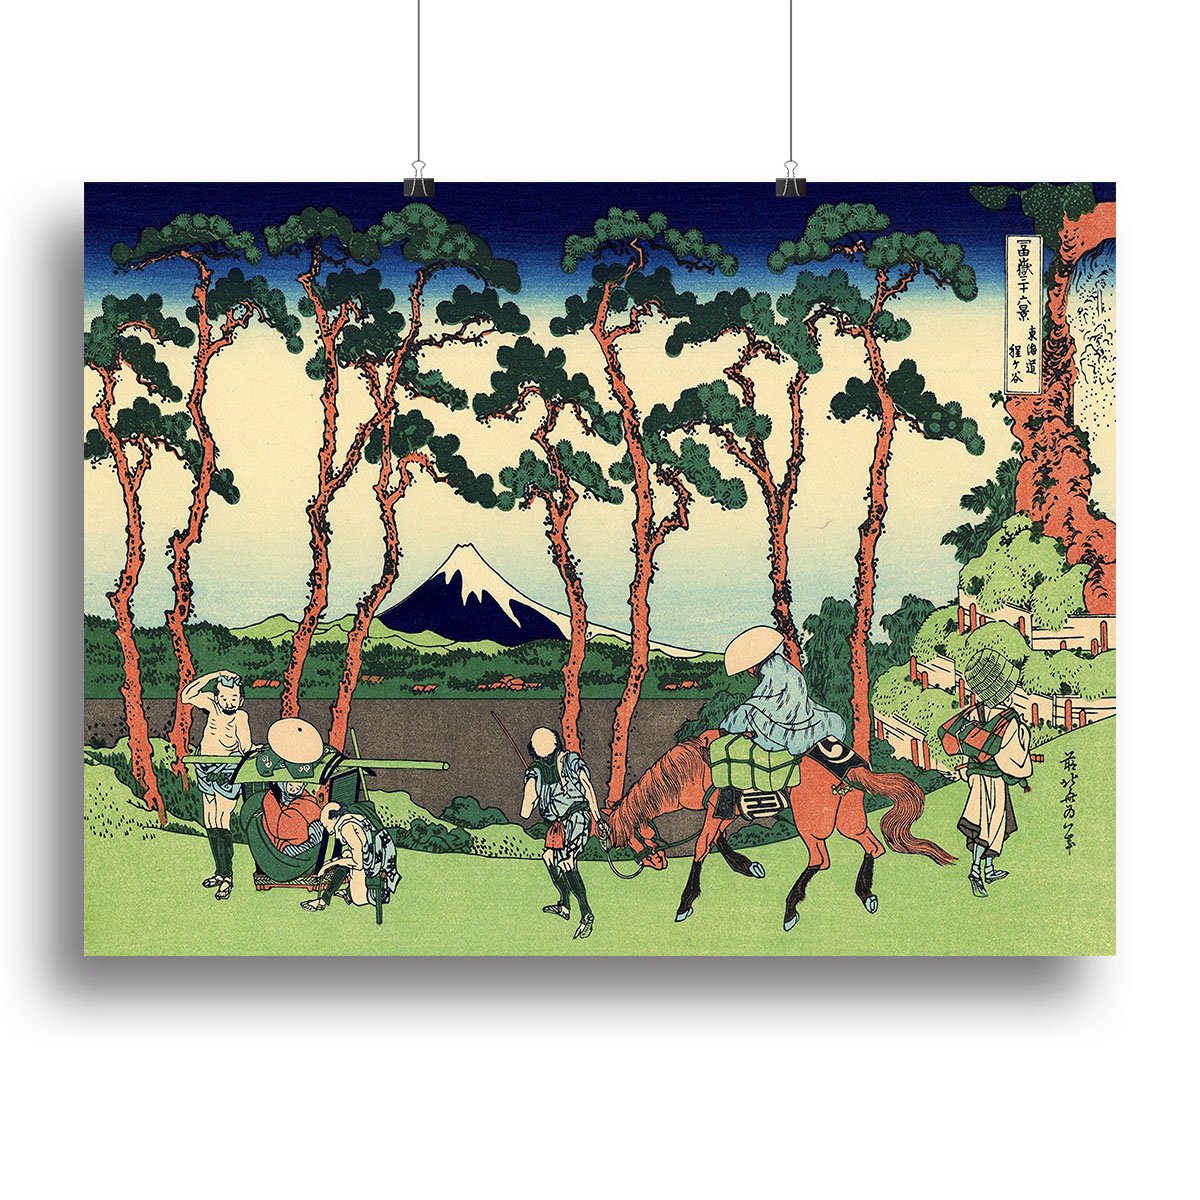 Hodogaya on the Tokaido by Hokusai Canvas Print or Poster